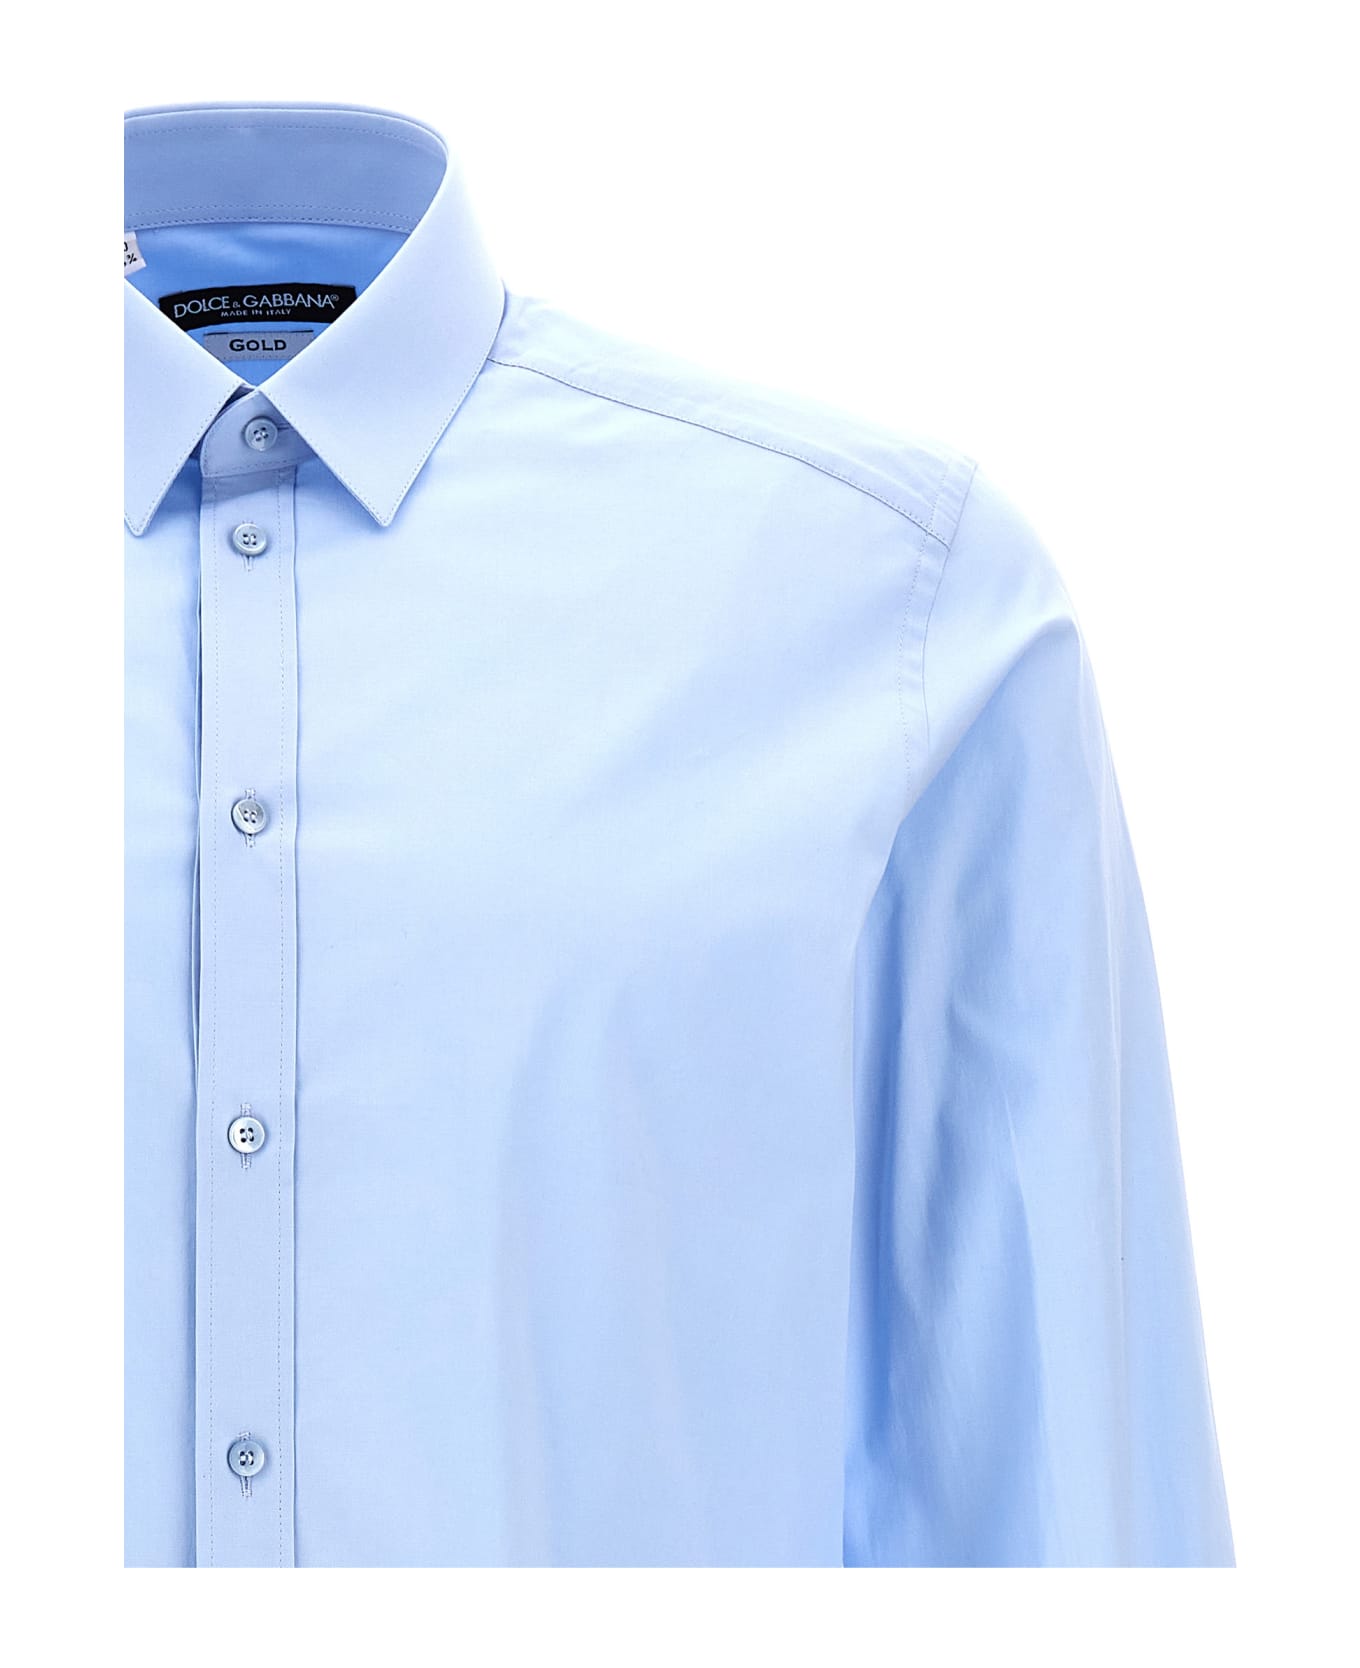 Dolce & Gabbana Long-sleeved Shirt - Light Blue シャツ